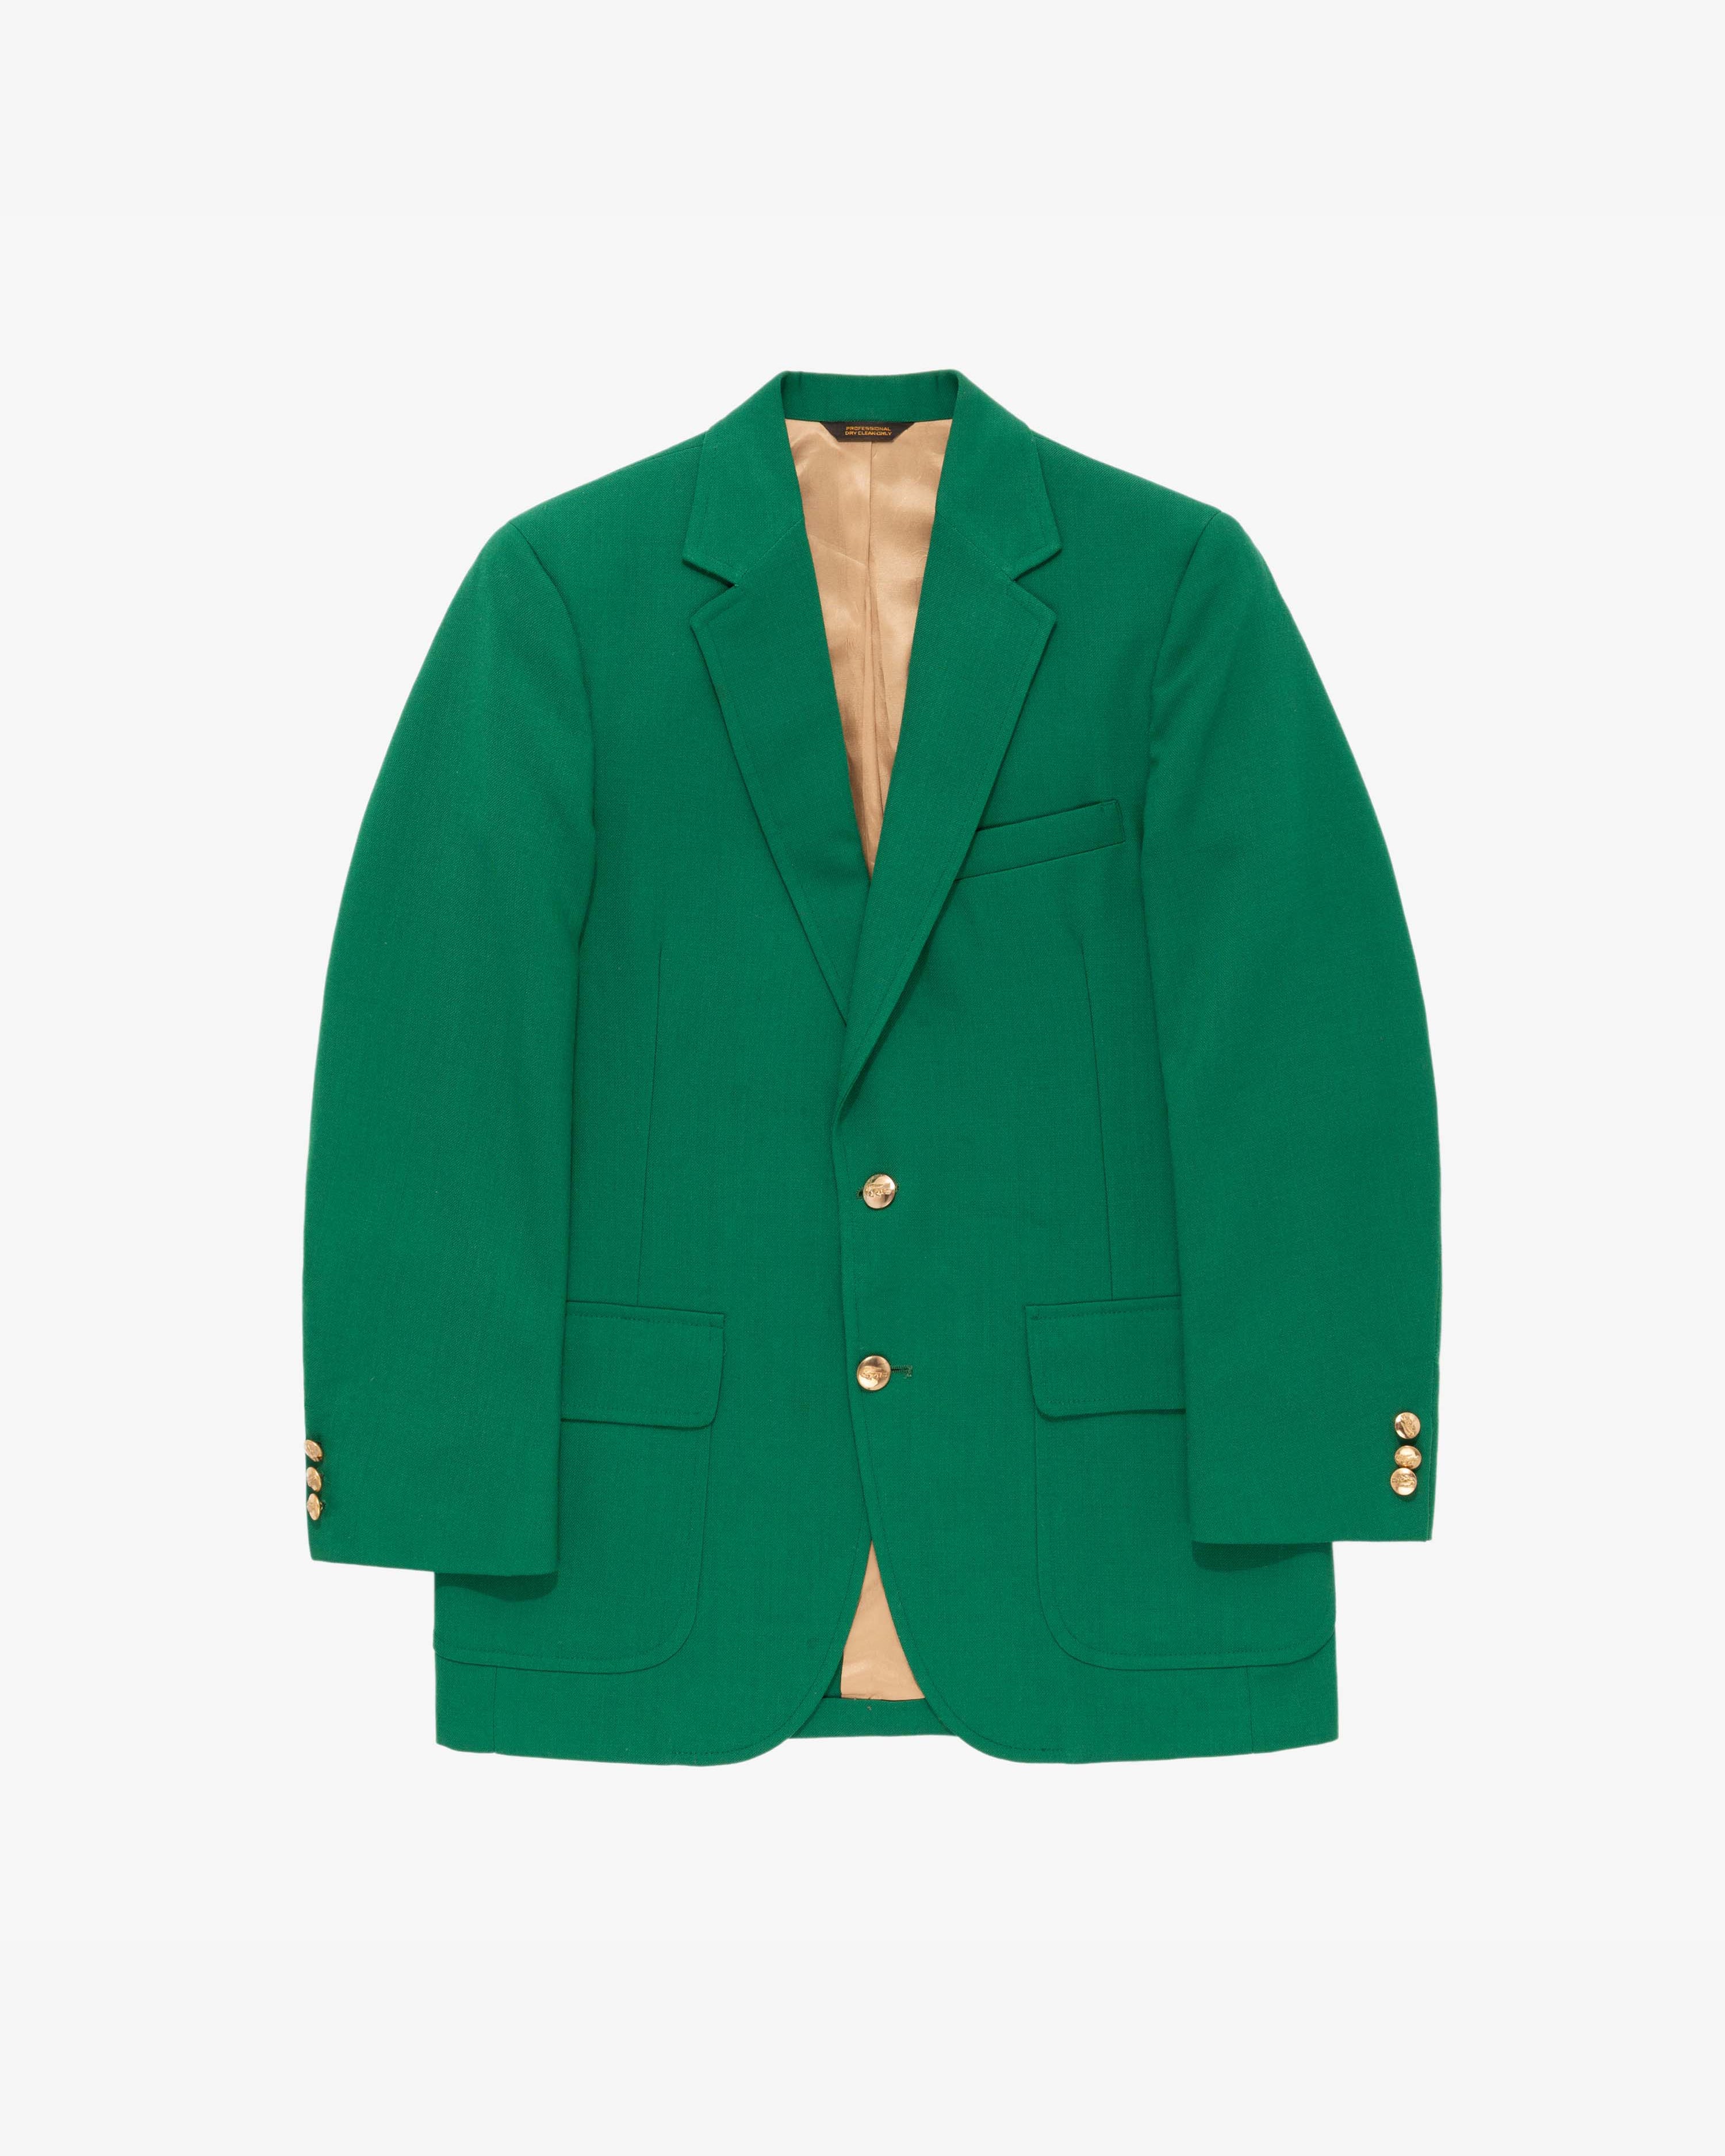 Vintage Masters Green Sport Jacket